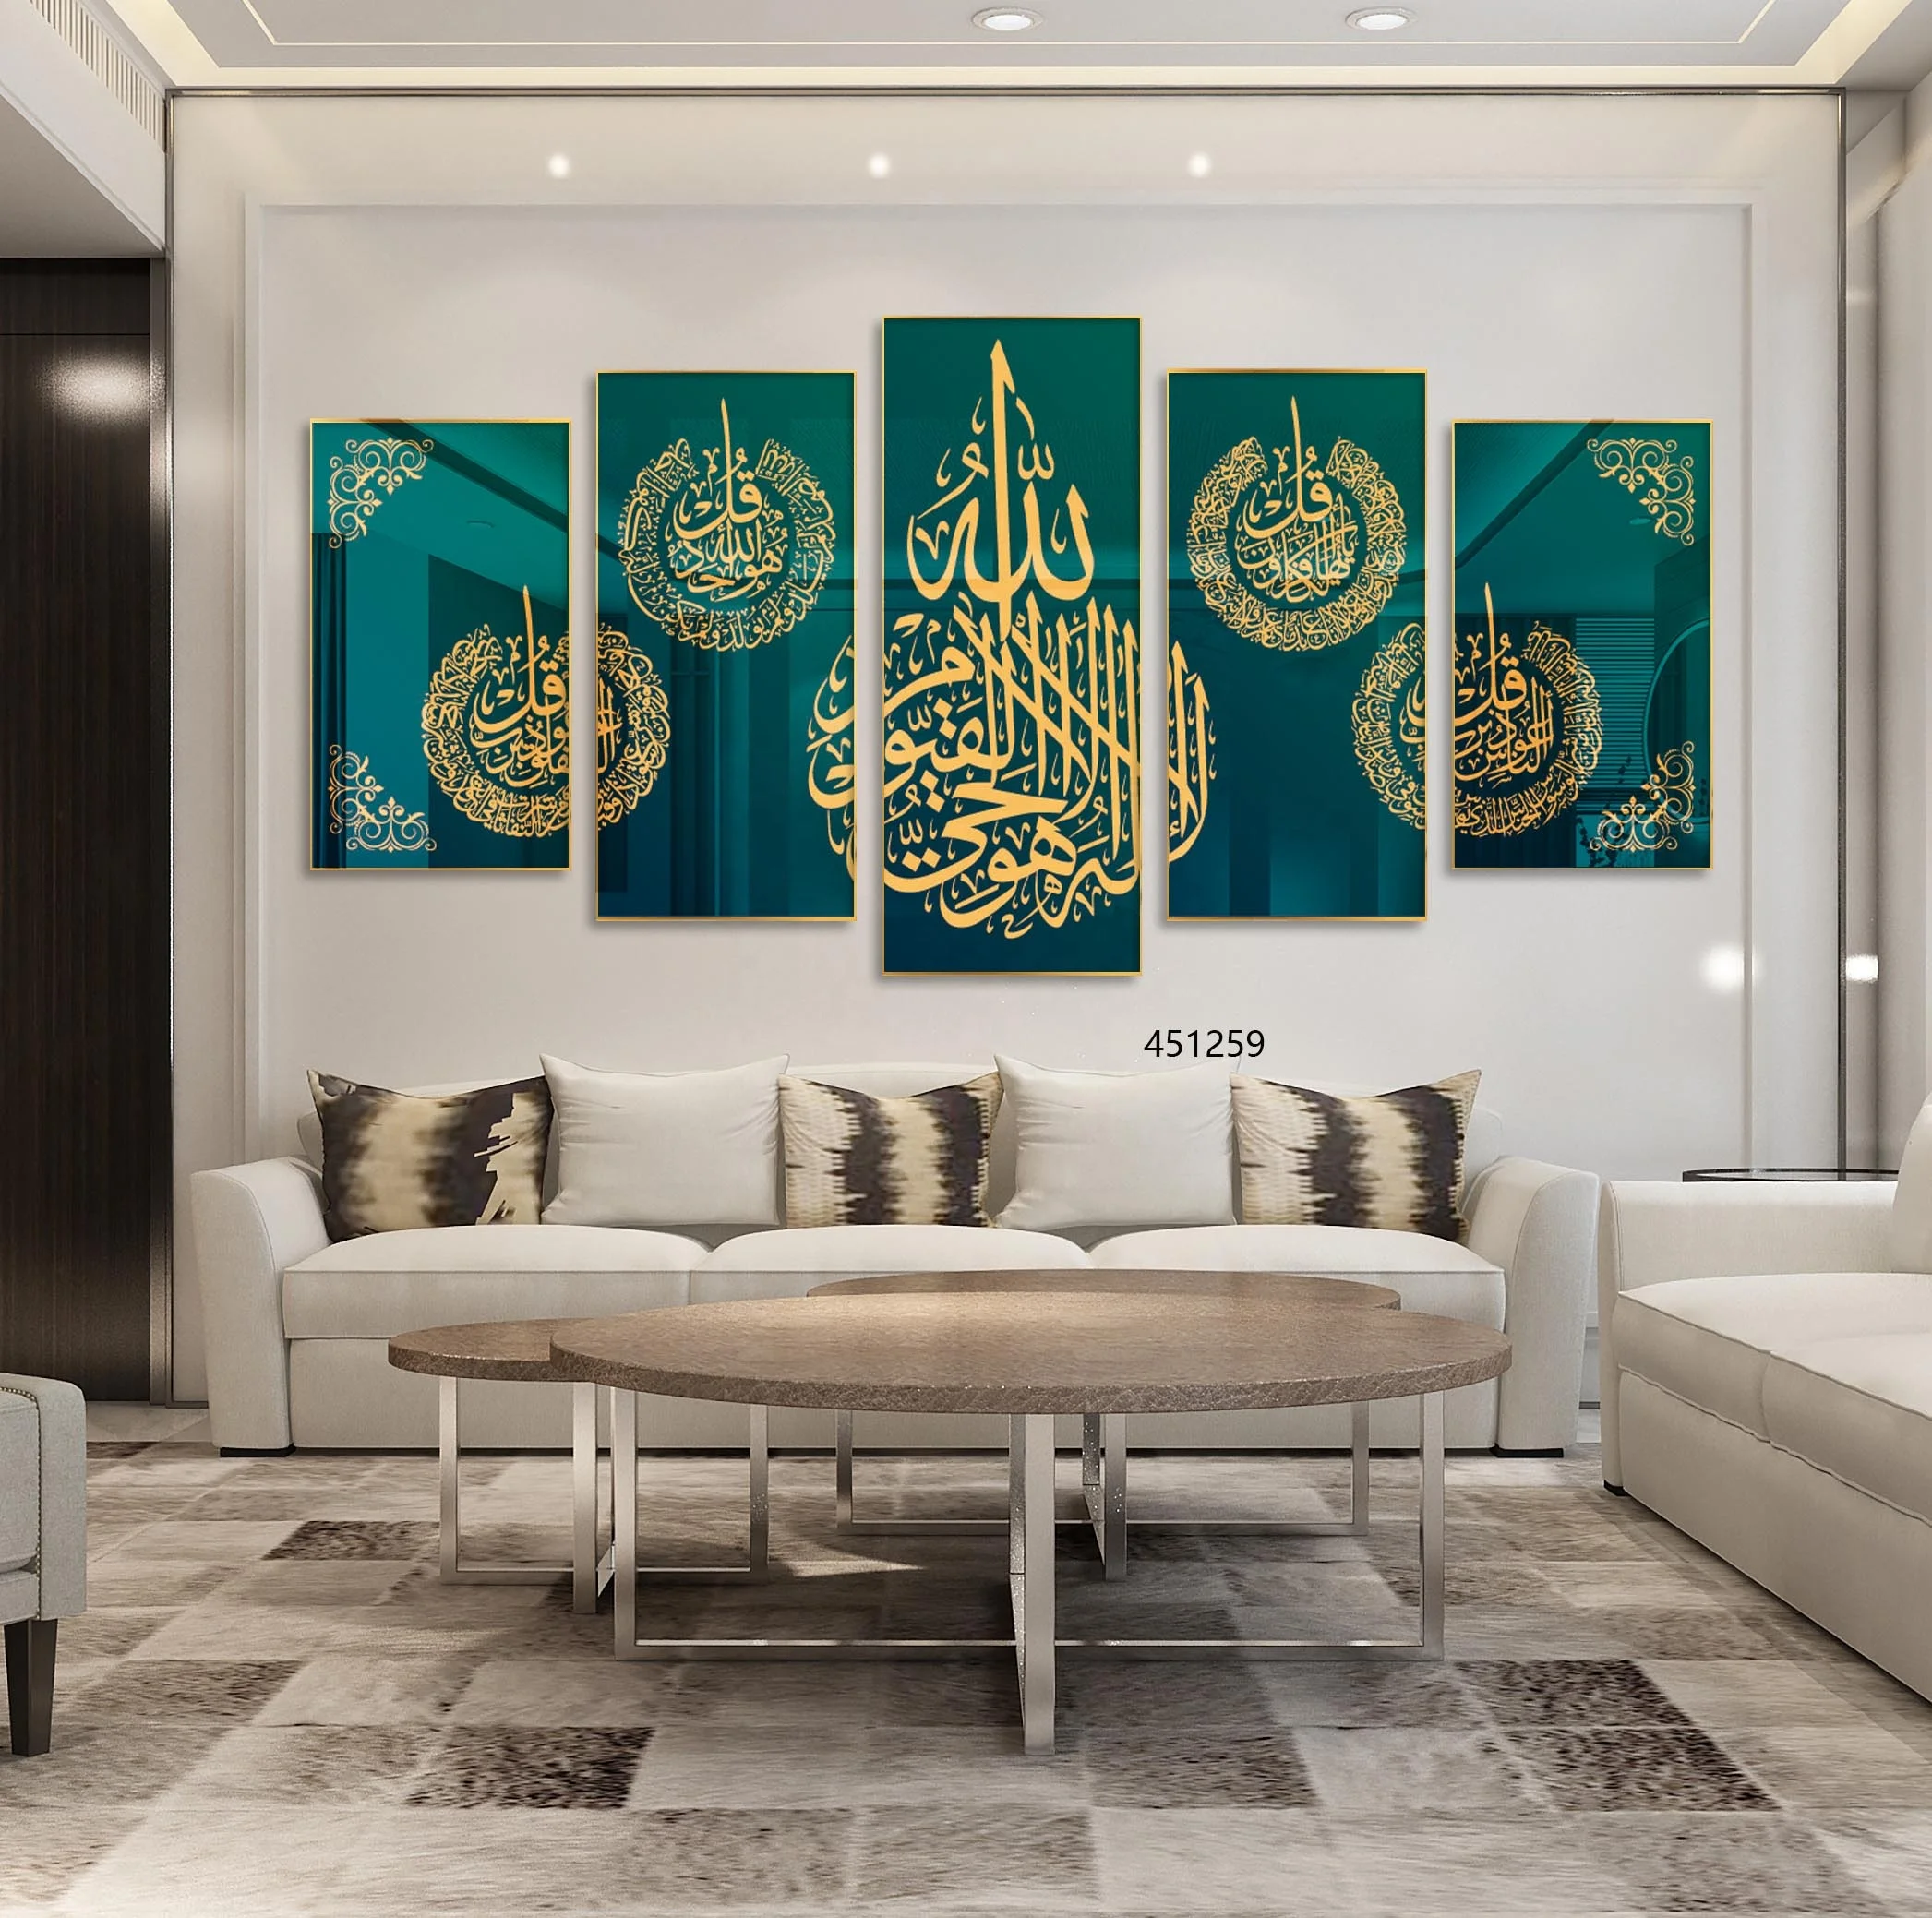 

muslim Wall Art decor Metal Framed crystal porcelain paintings UV printing on Acrylic 5 panel slamic Art Arabic Calligraphy